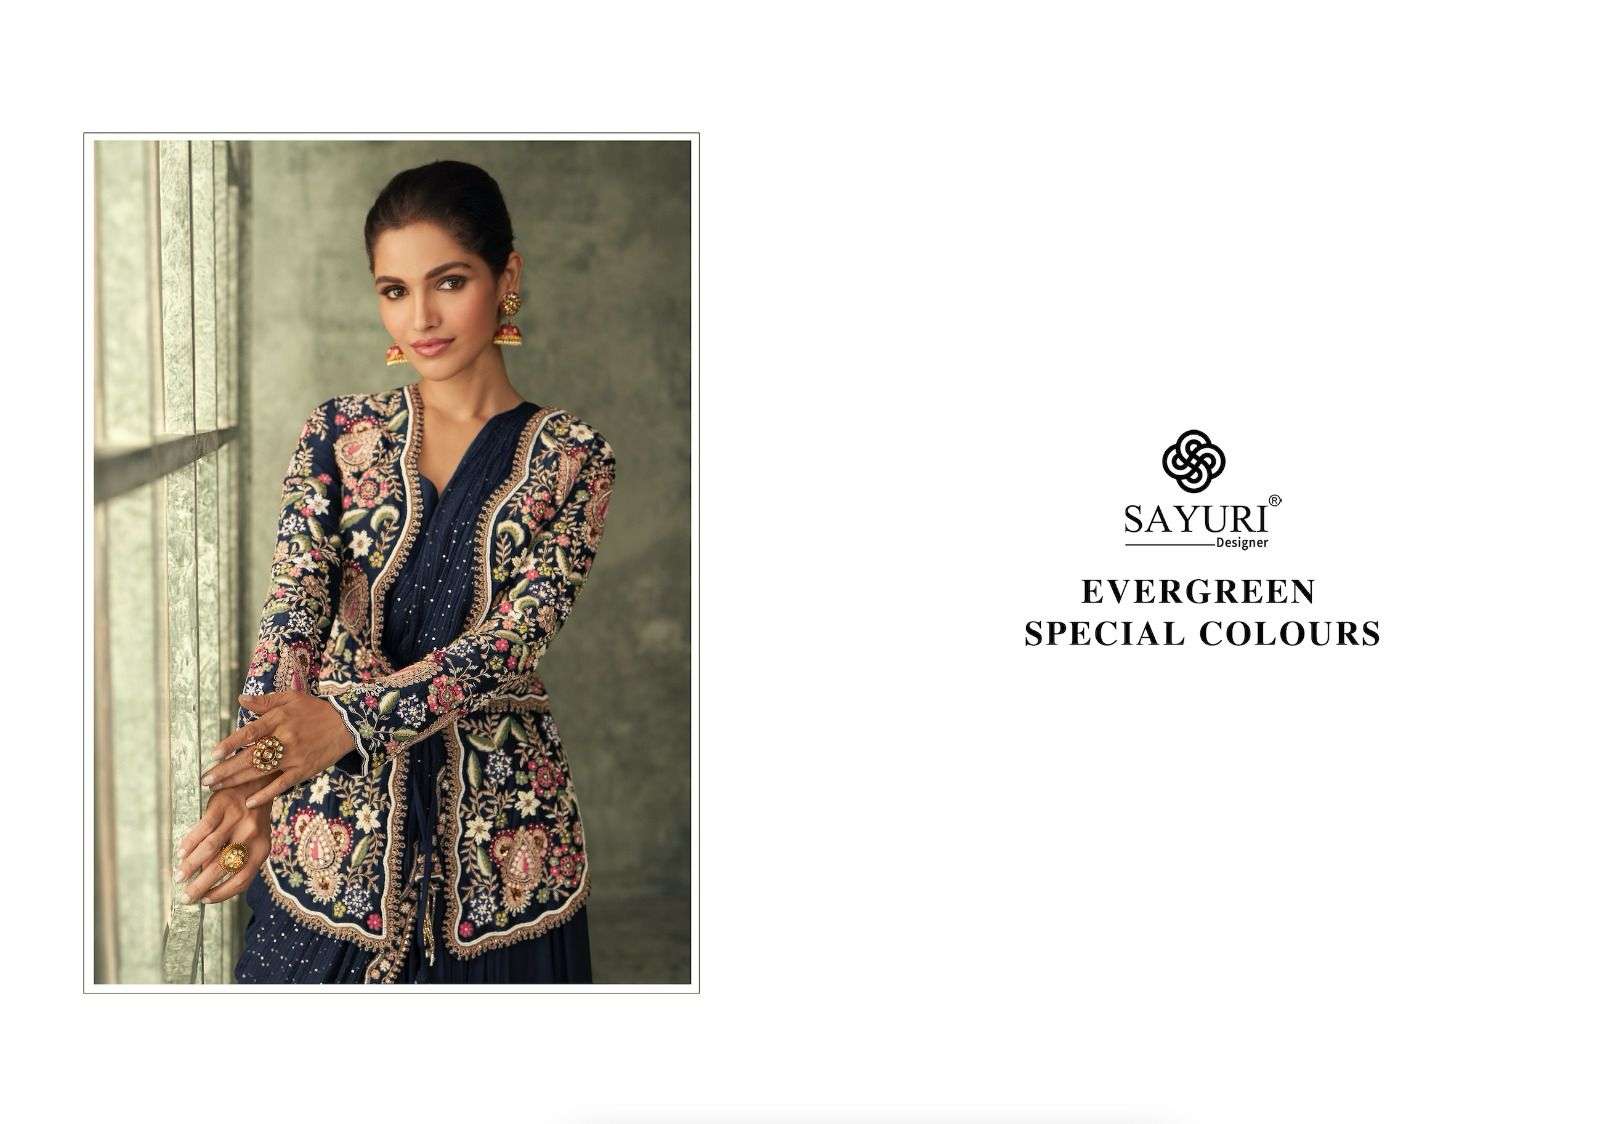 sayuri designer evergreen special 5250 colour series latest designer wedding lehenga wholesaler surat gujarat